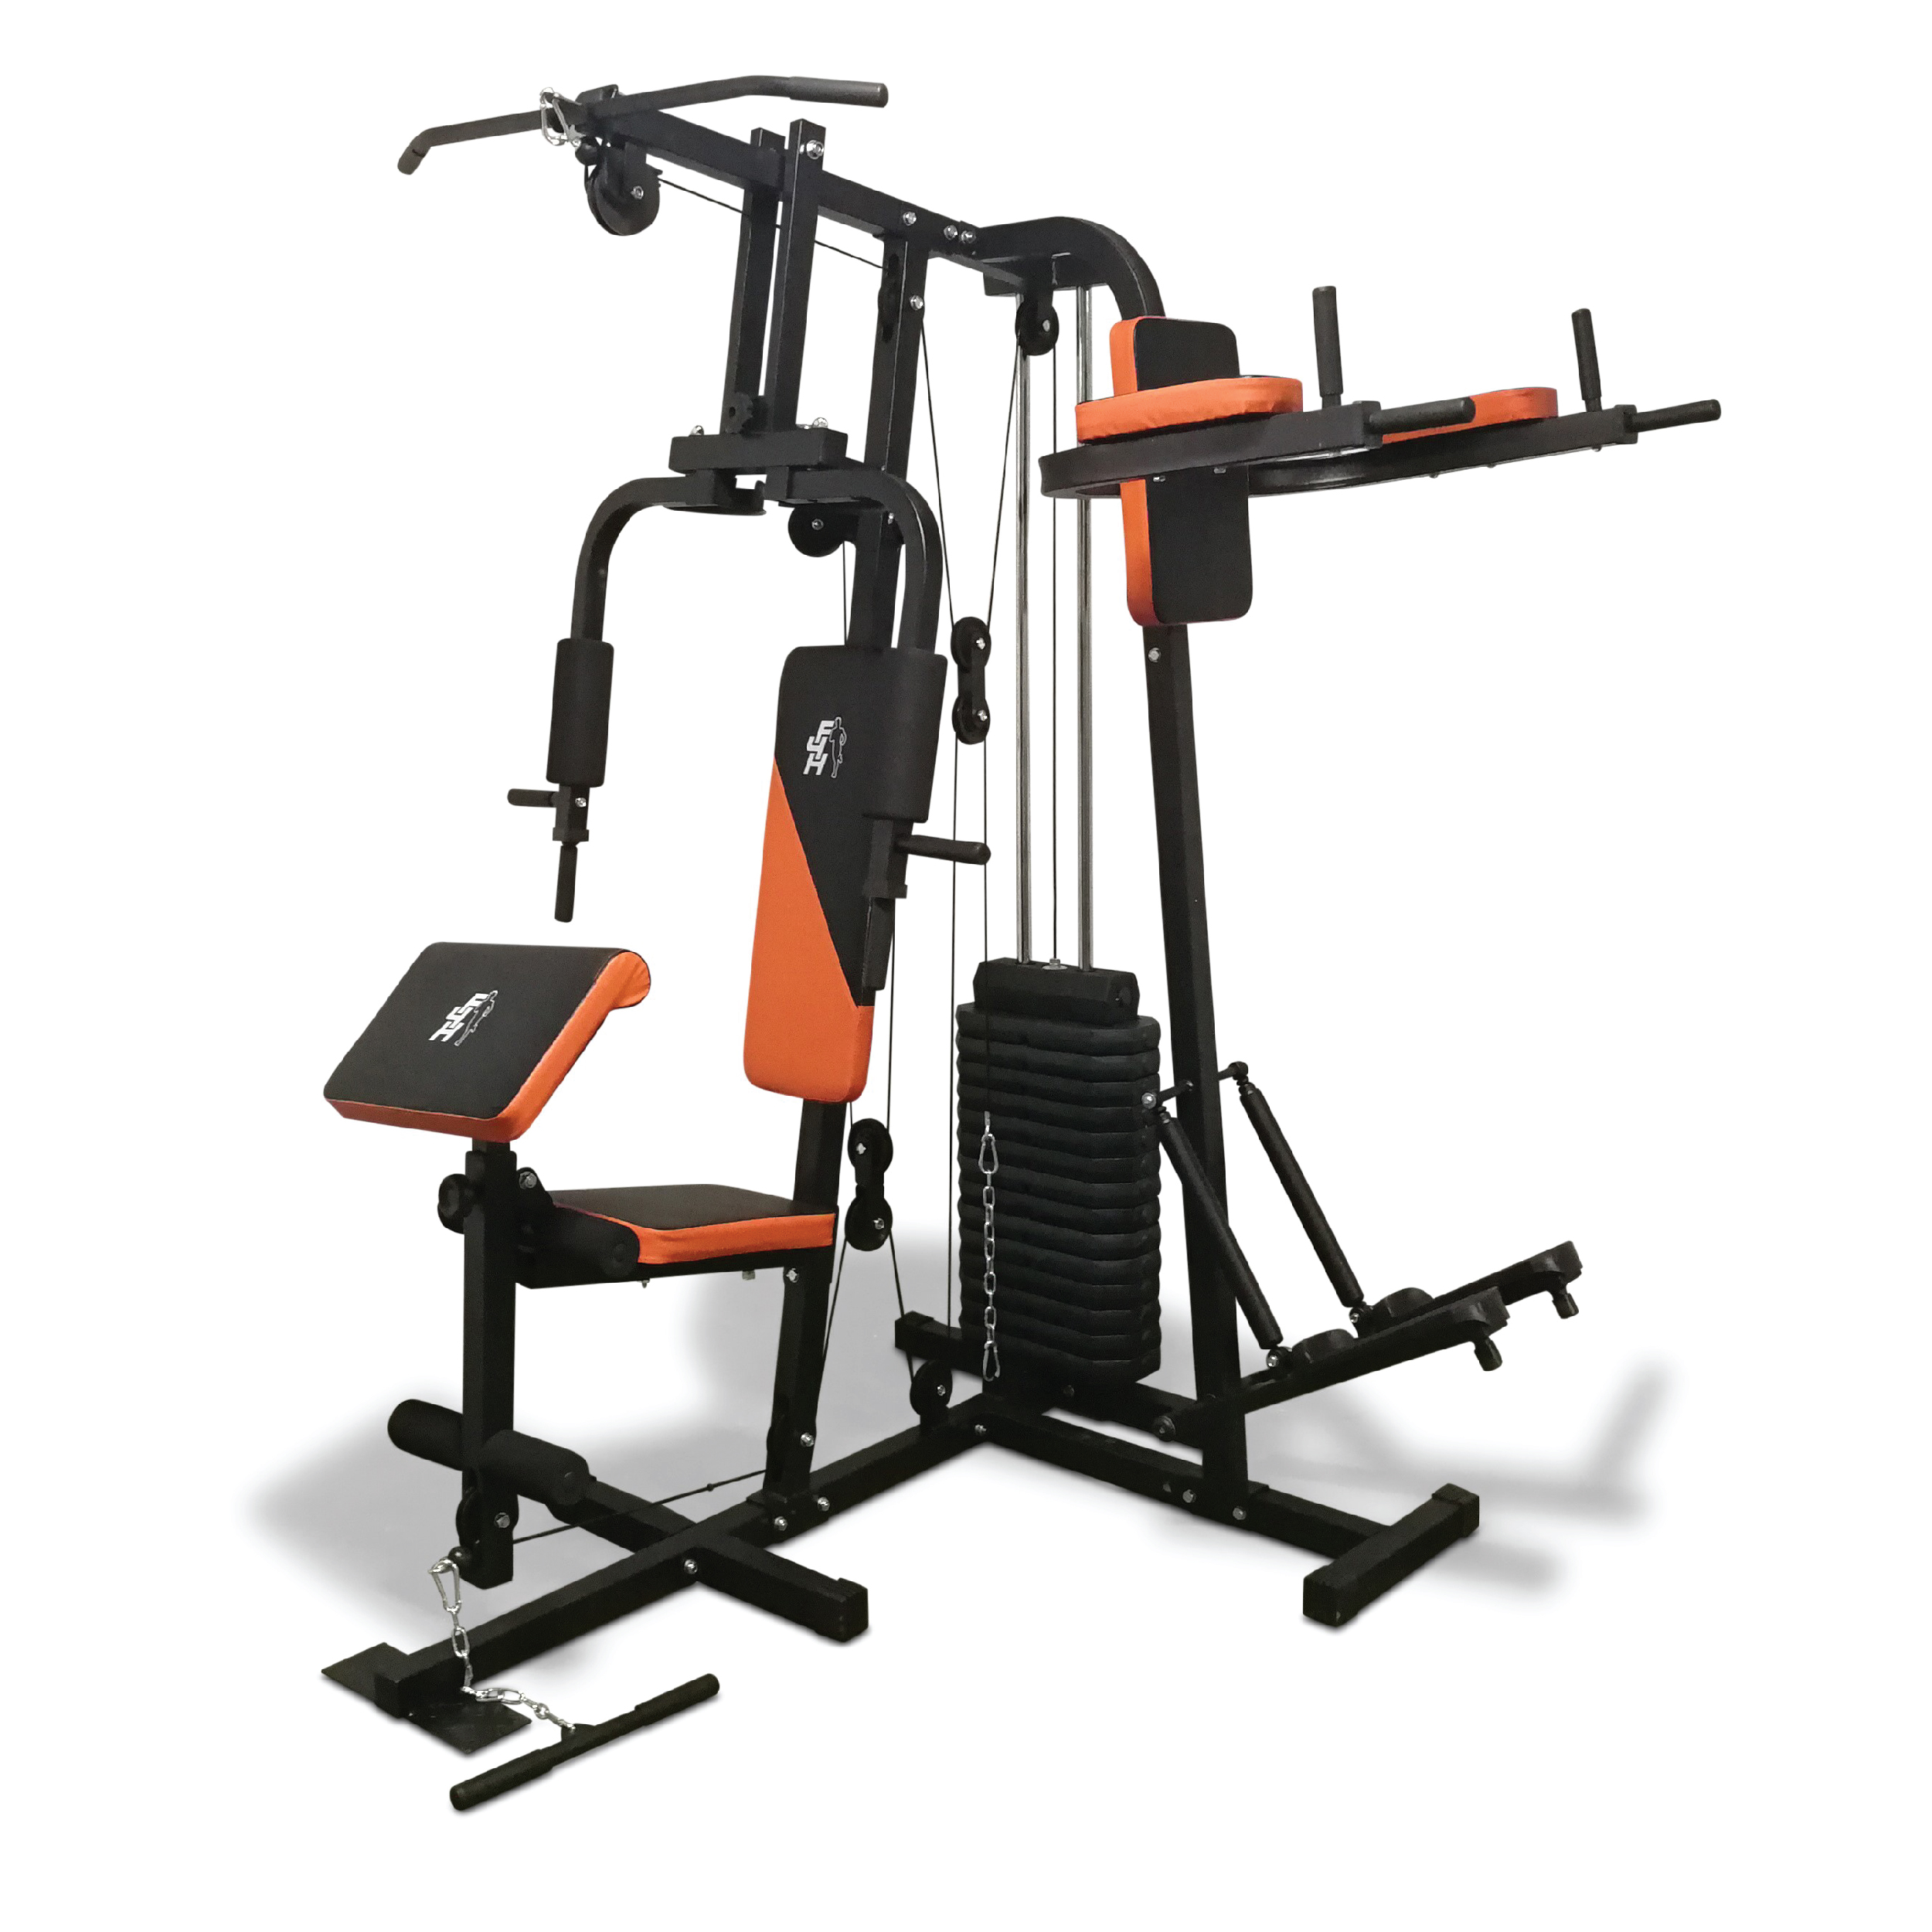 Home Gym Equipment &, Exercise Equipment & Machines UK